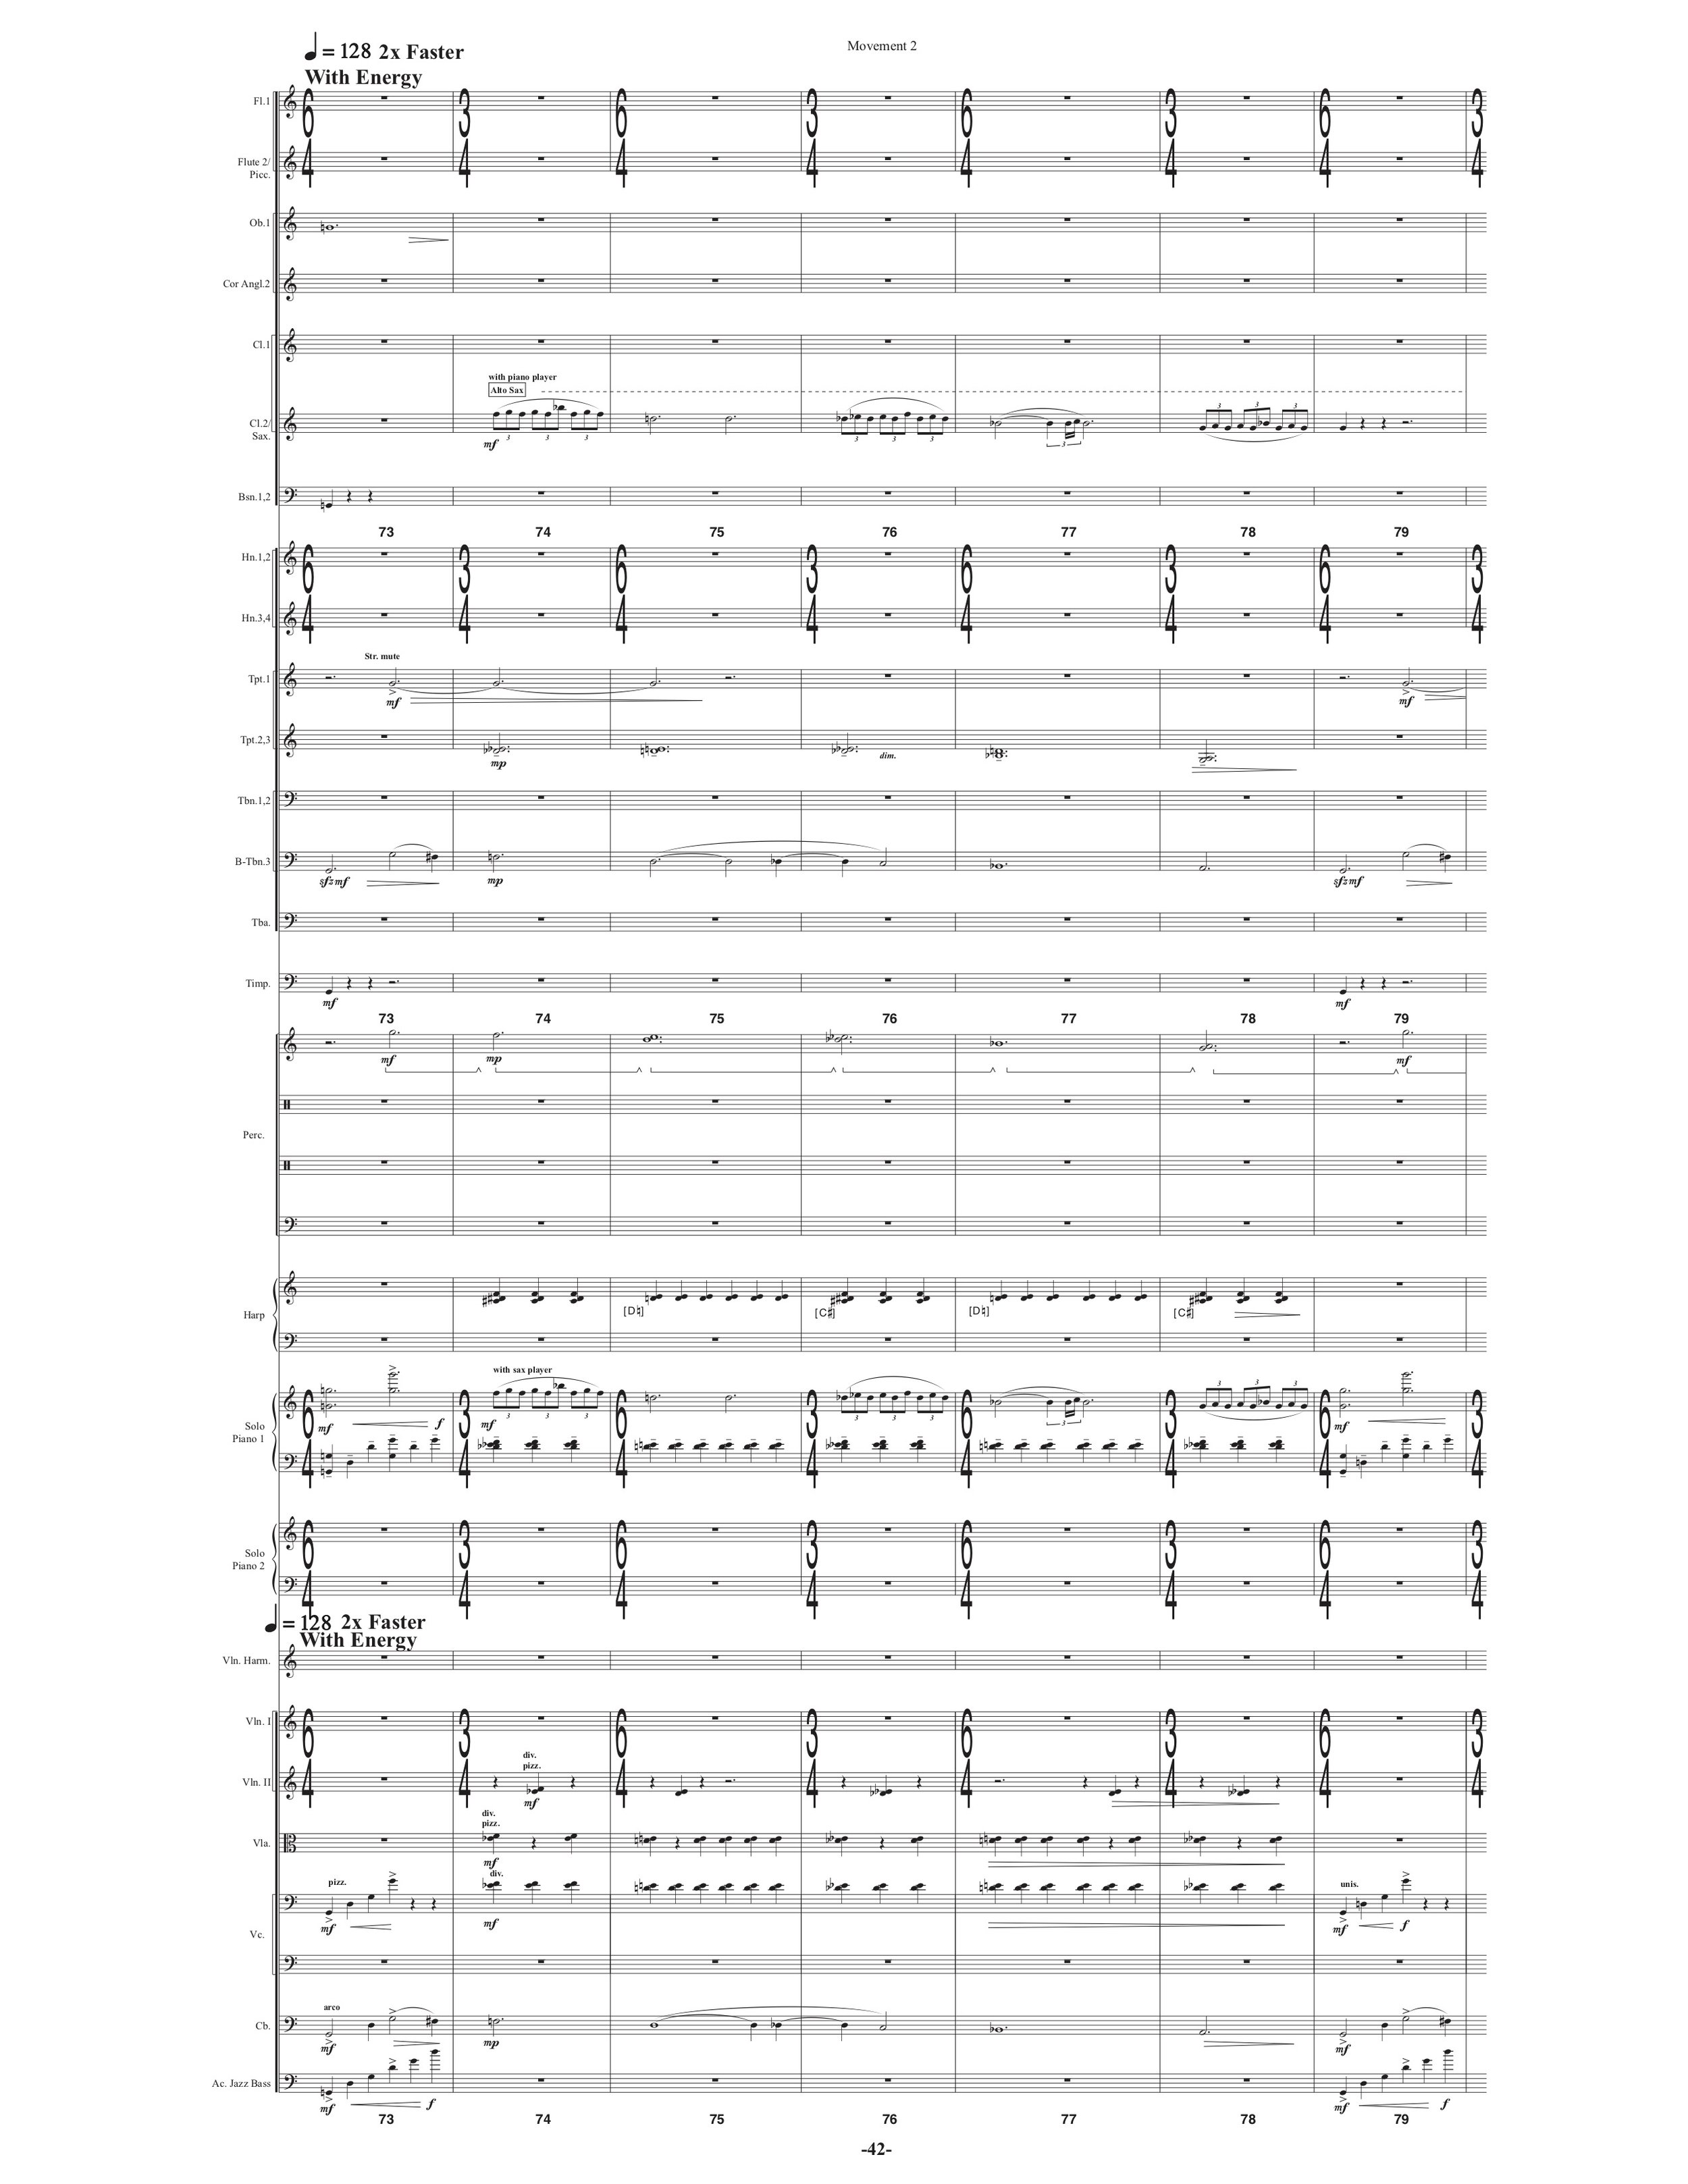 Symphony_Orch & 2 Pianos p47.jpg